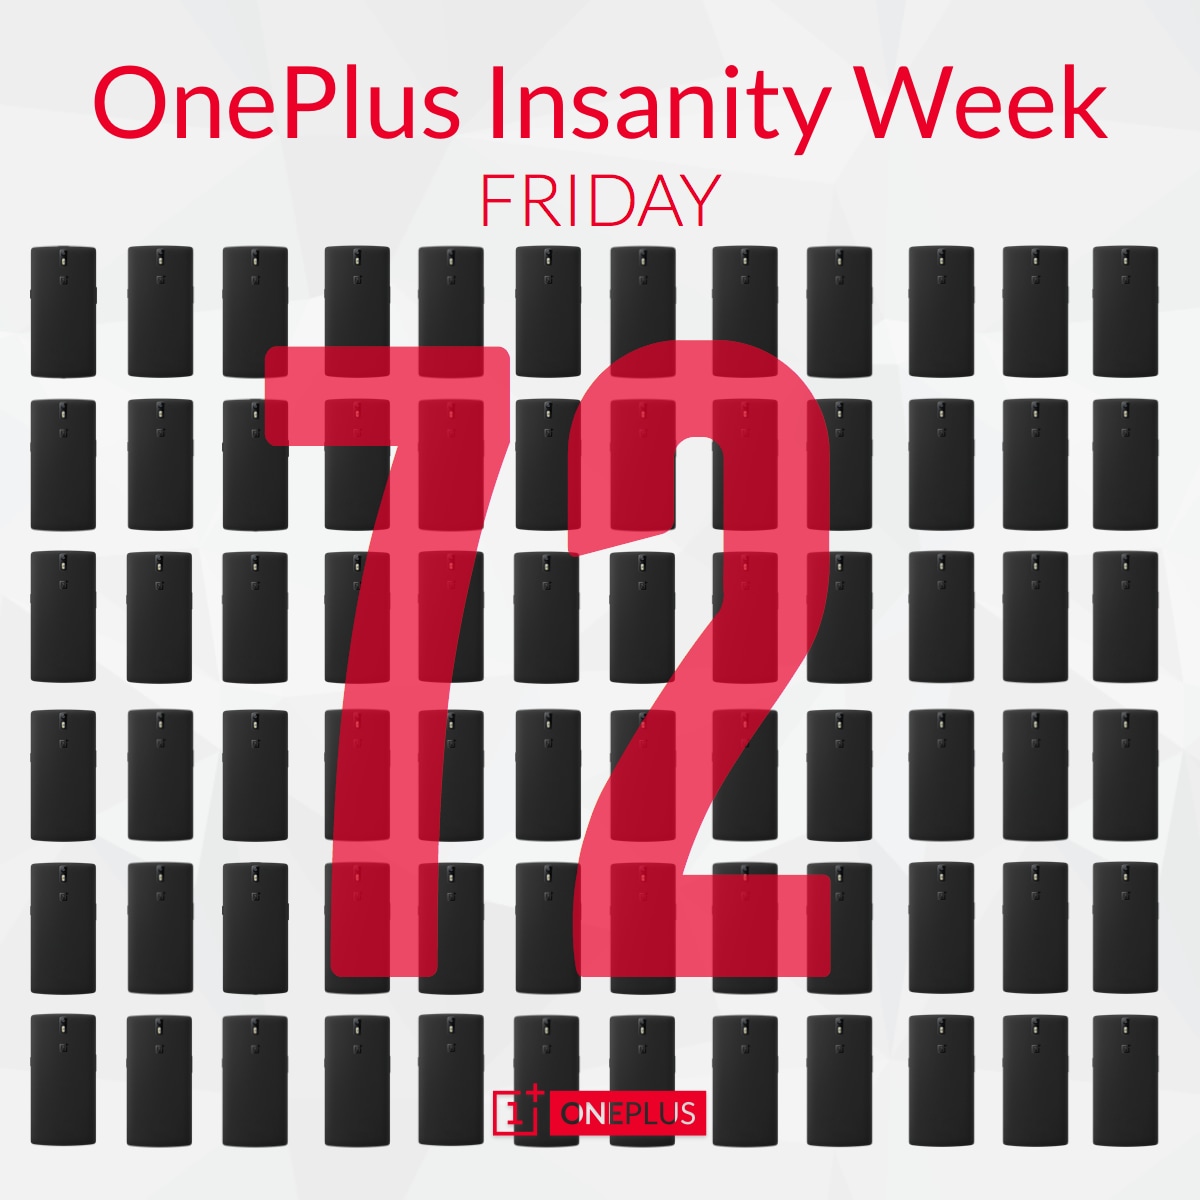 OnePlus Insanity Week giorno 5, in regalo ben 72 OnePlus One: ecco come partecipare!